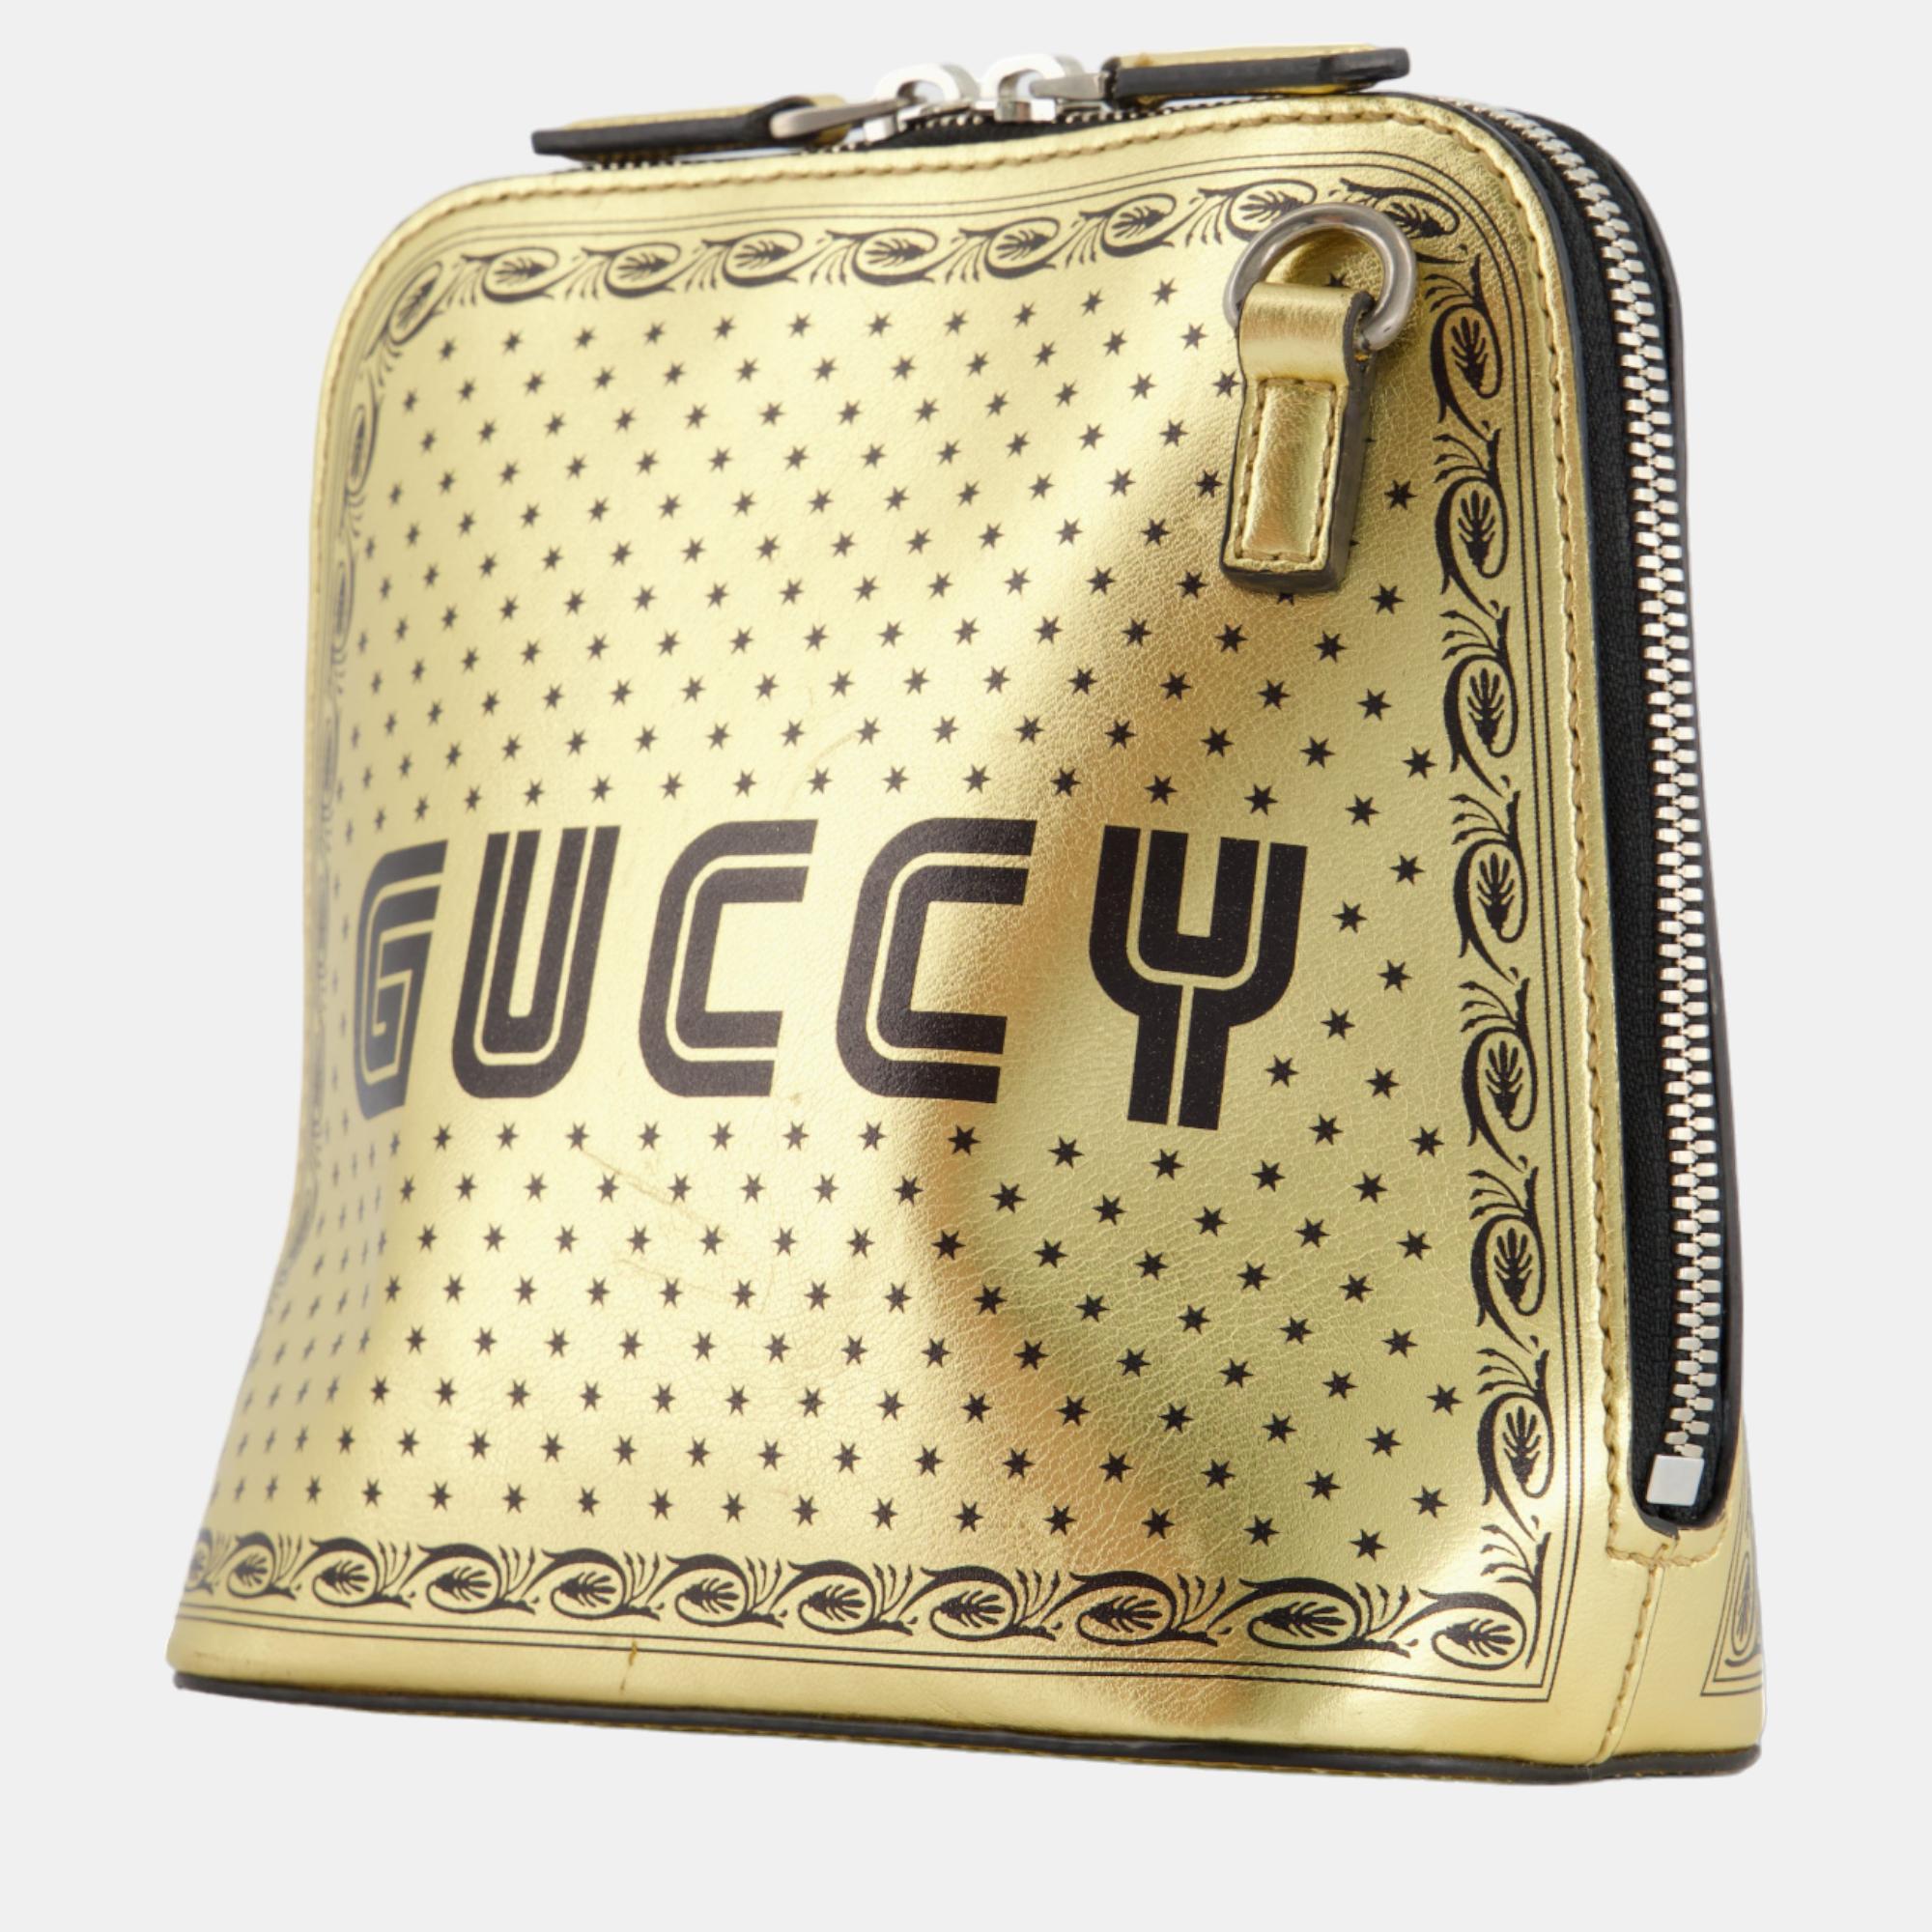 Gucci Gold And Black Leather Guccy Mini Dome Sega Bag